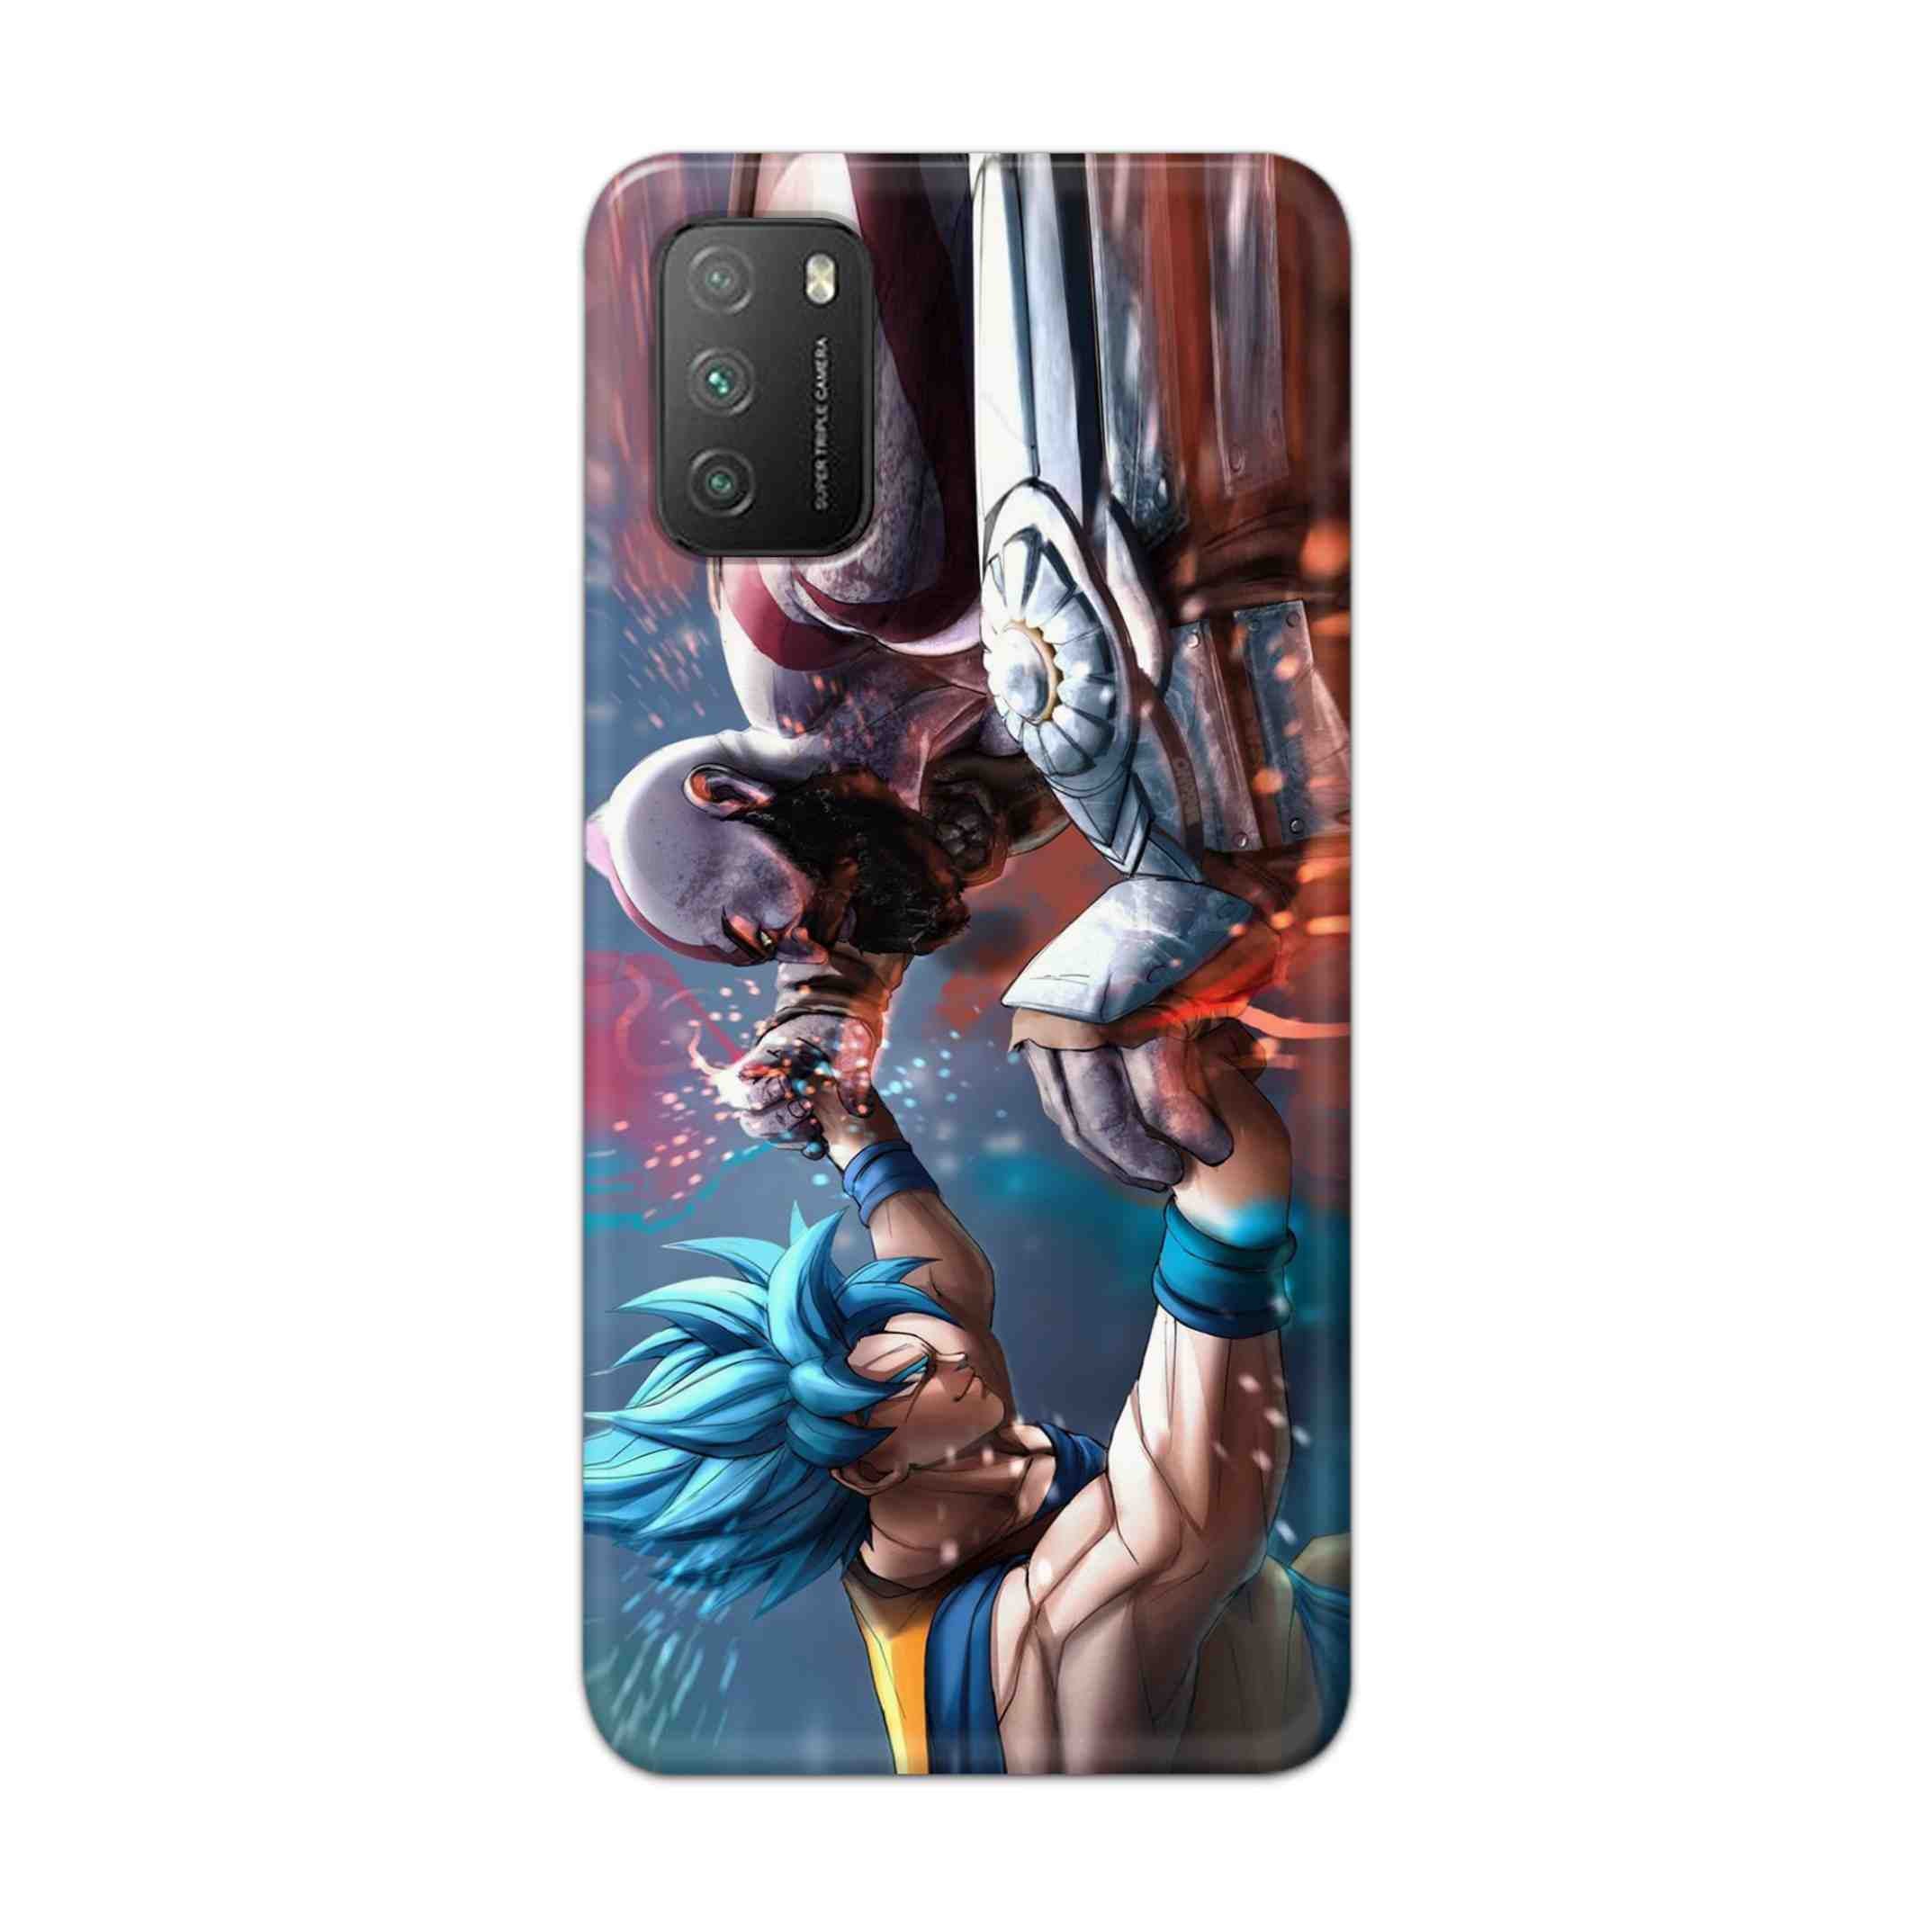 Buy Goku Vs Kratos Hard Back Mobile Phone Case Cover For Poco M3 Online